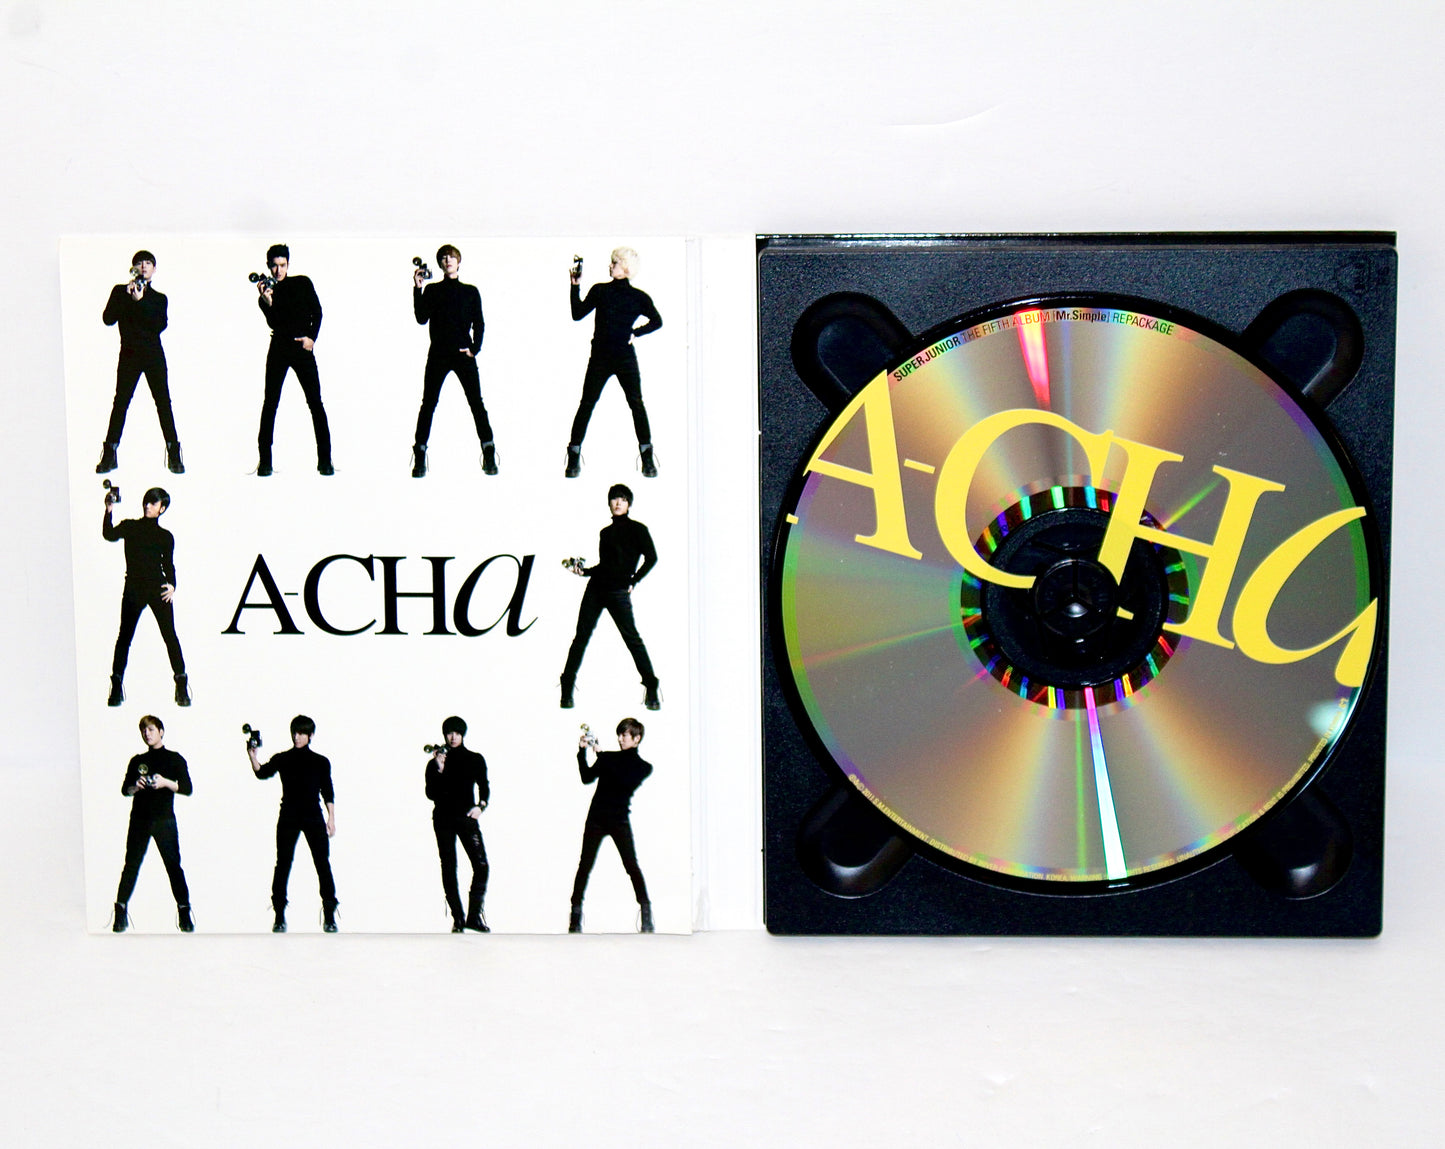 SUPER JUNIOR 5th Album Repackage: A-CHA